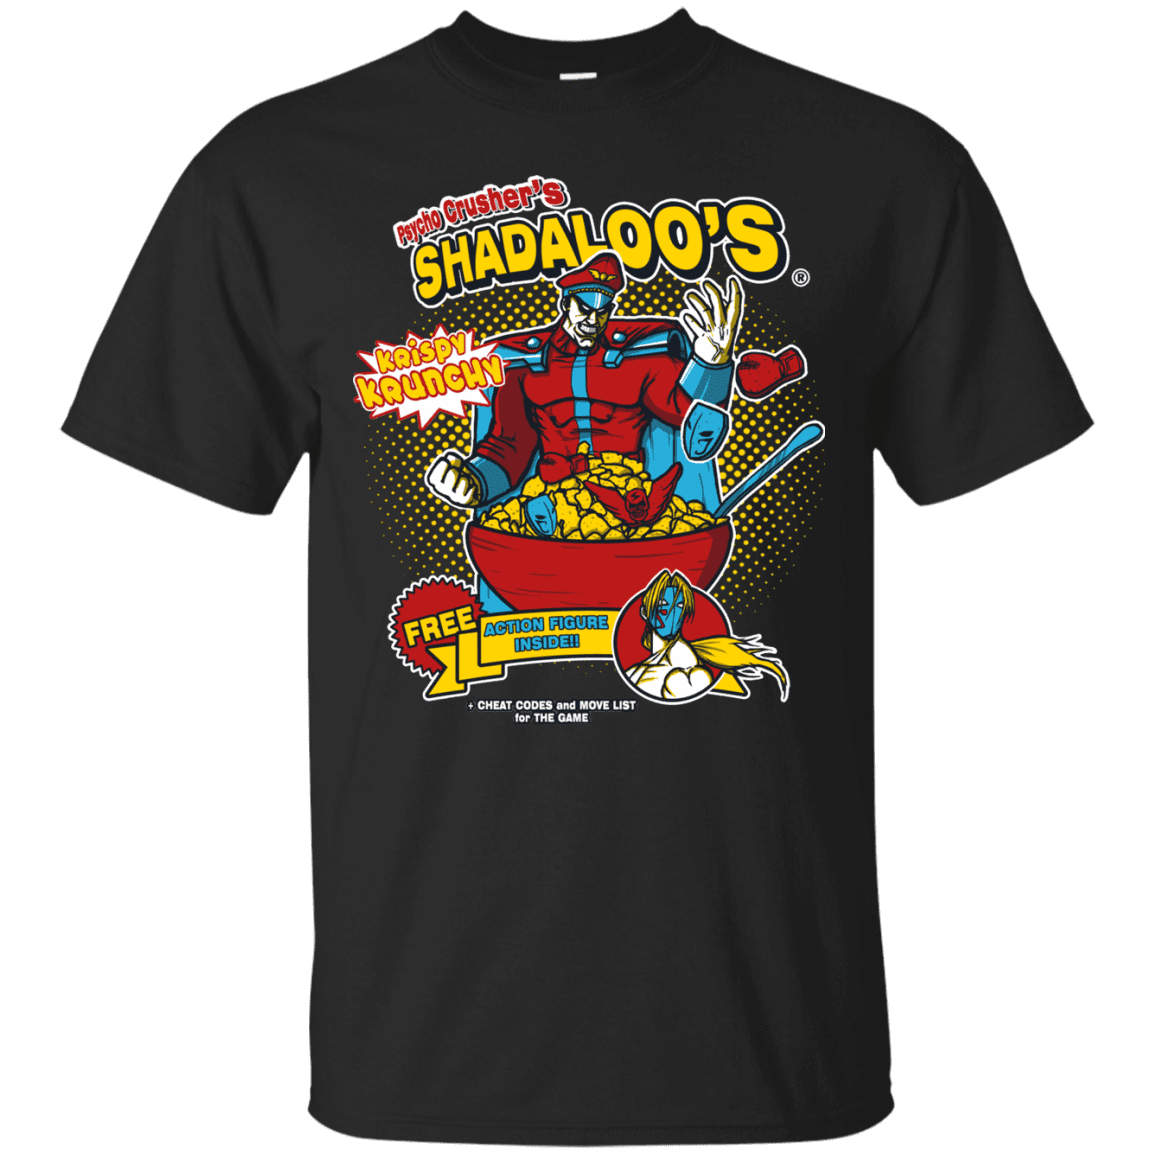 T-Shirts Black / S Shadaloos T-Shirt